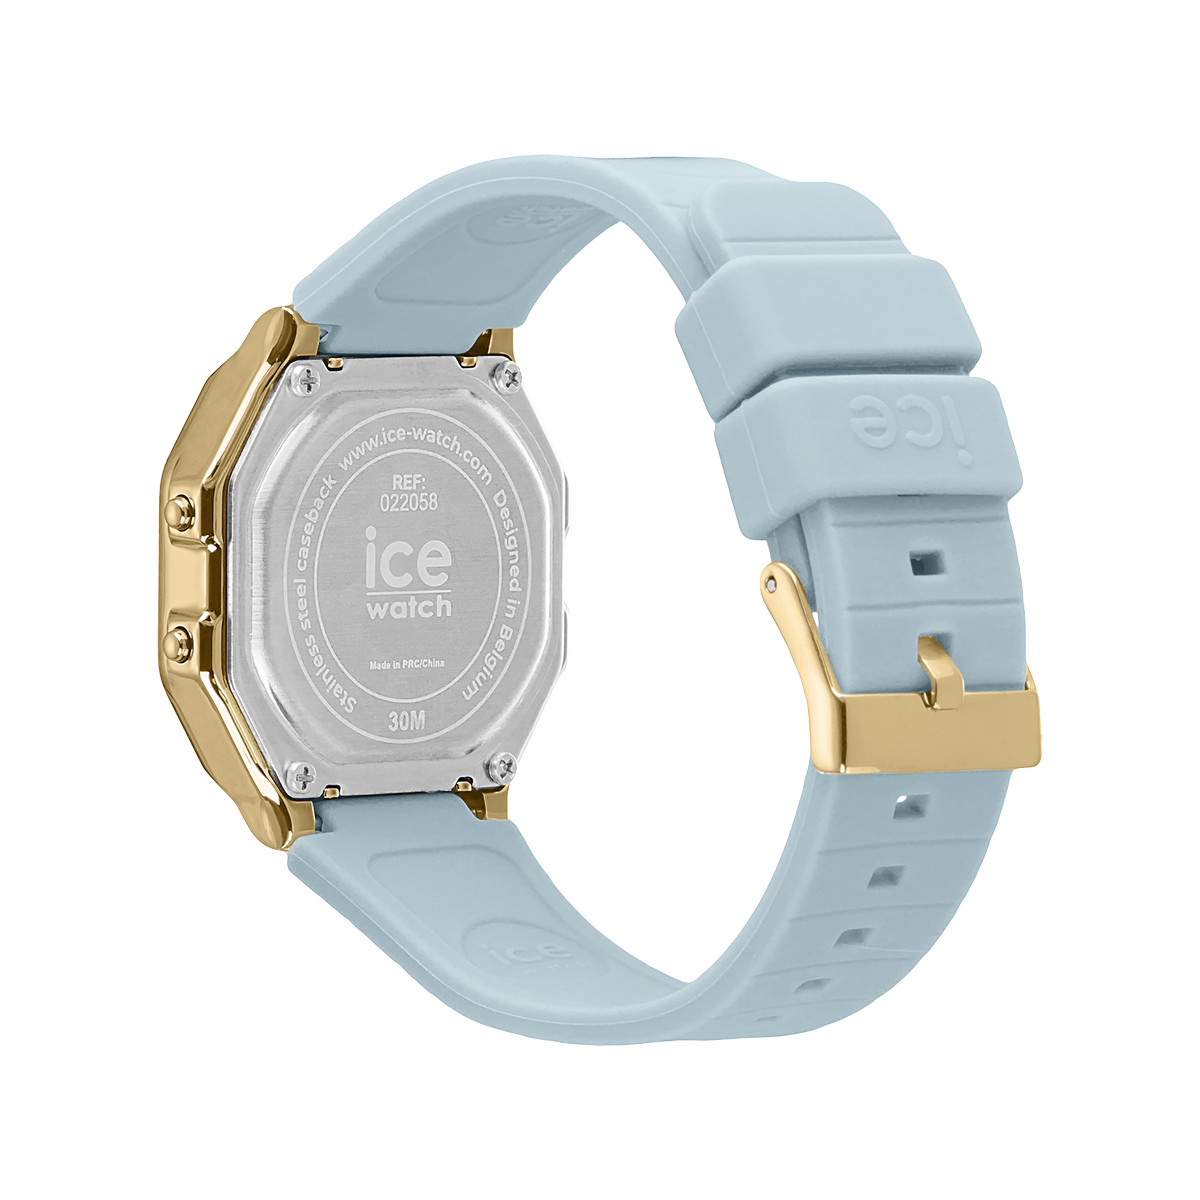 Montre ICE WATCH Ice digit retro femme bracelet silicone bleu - vue 3